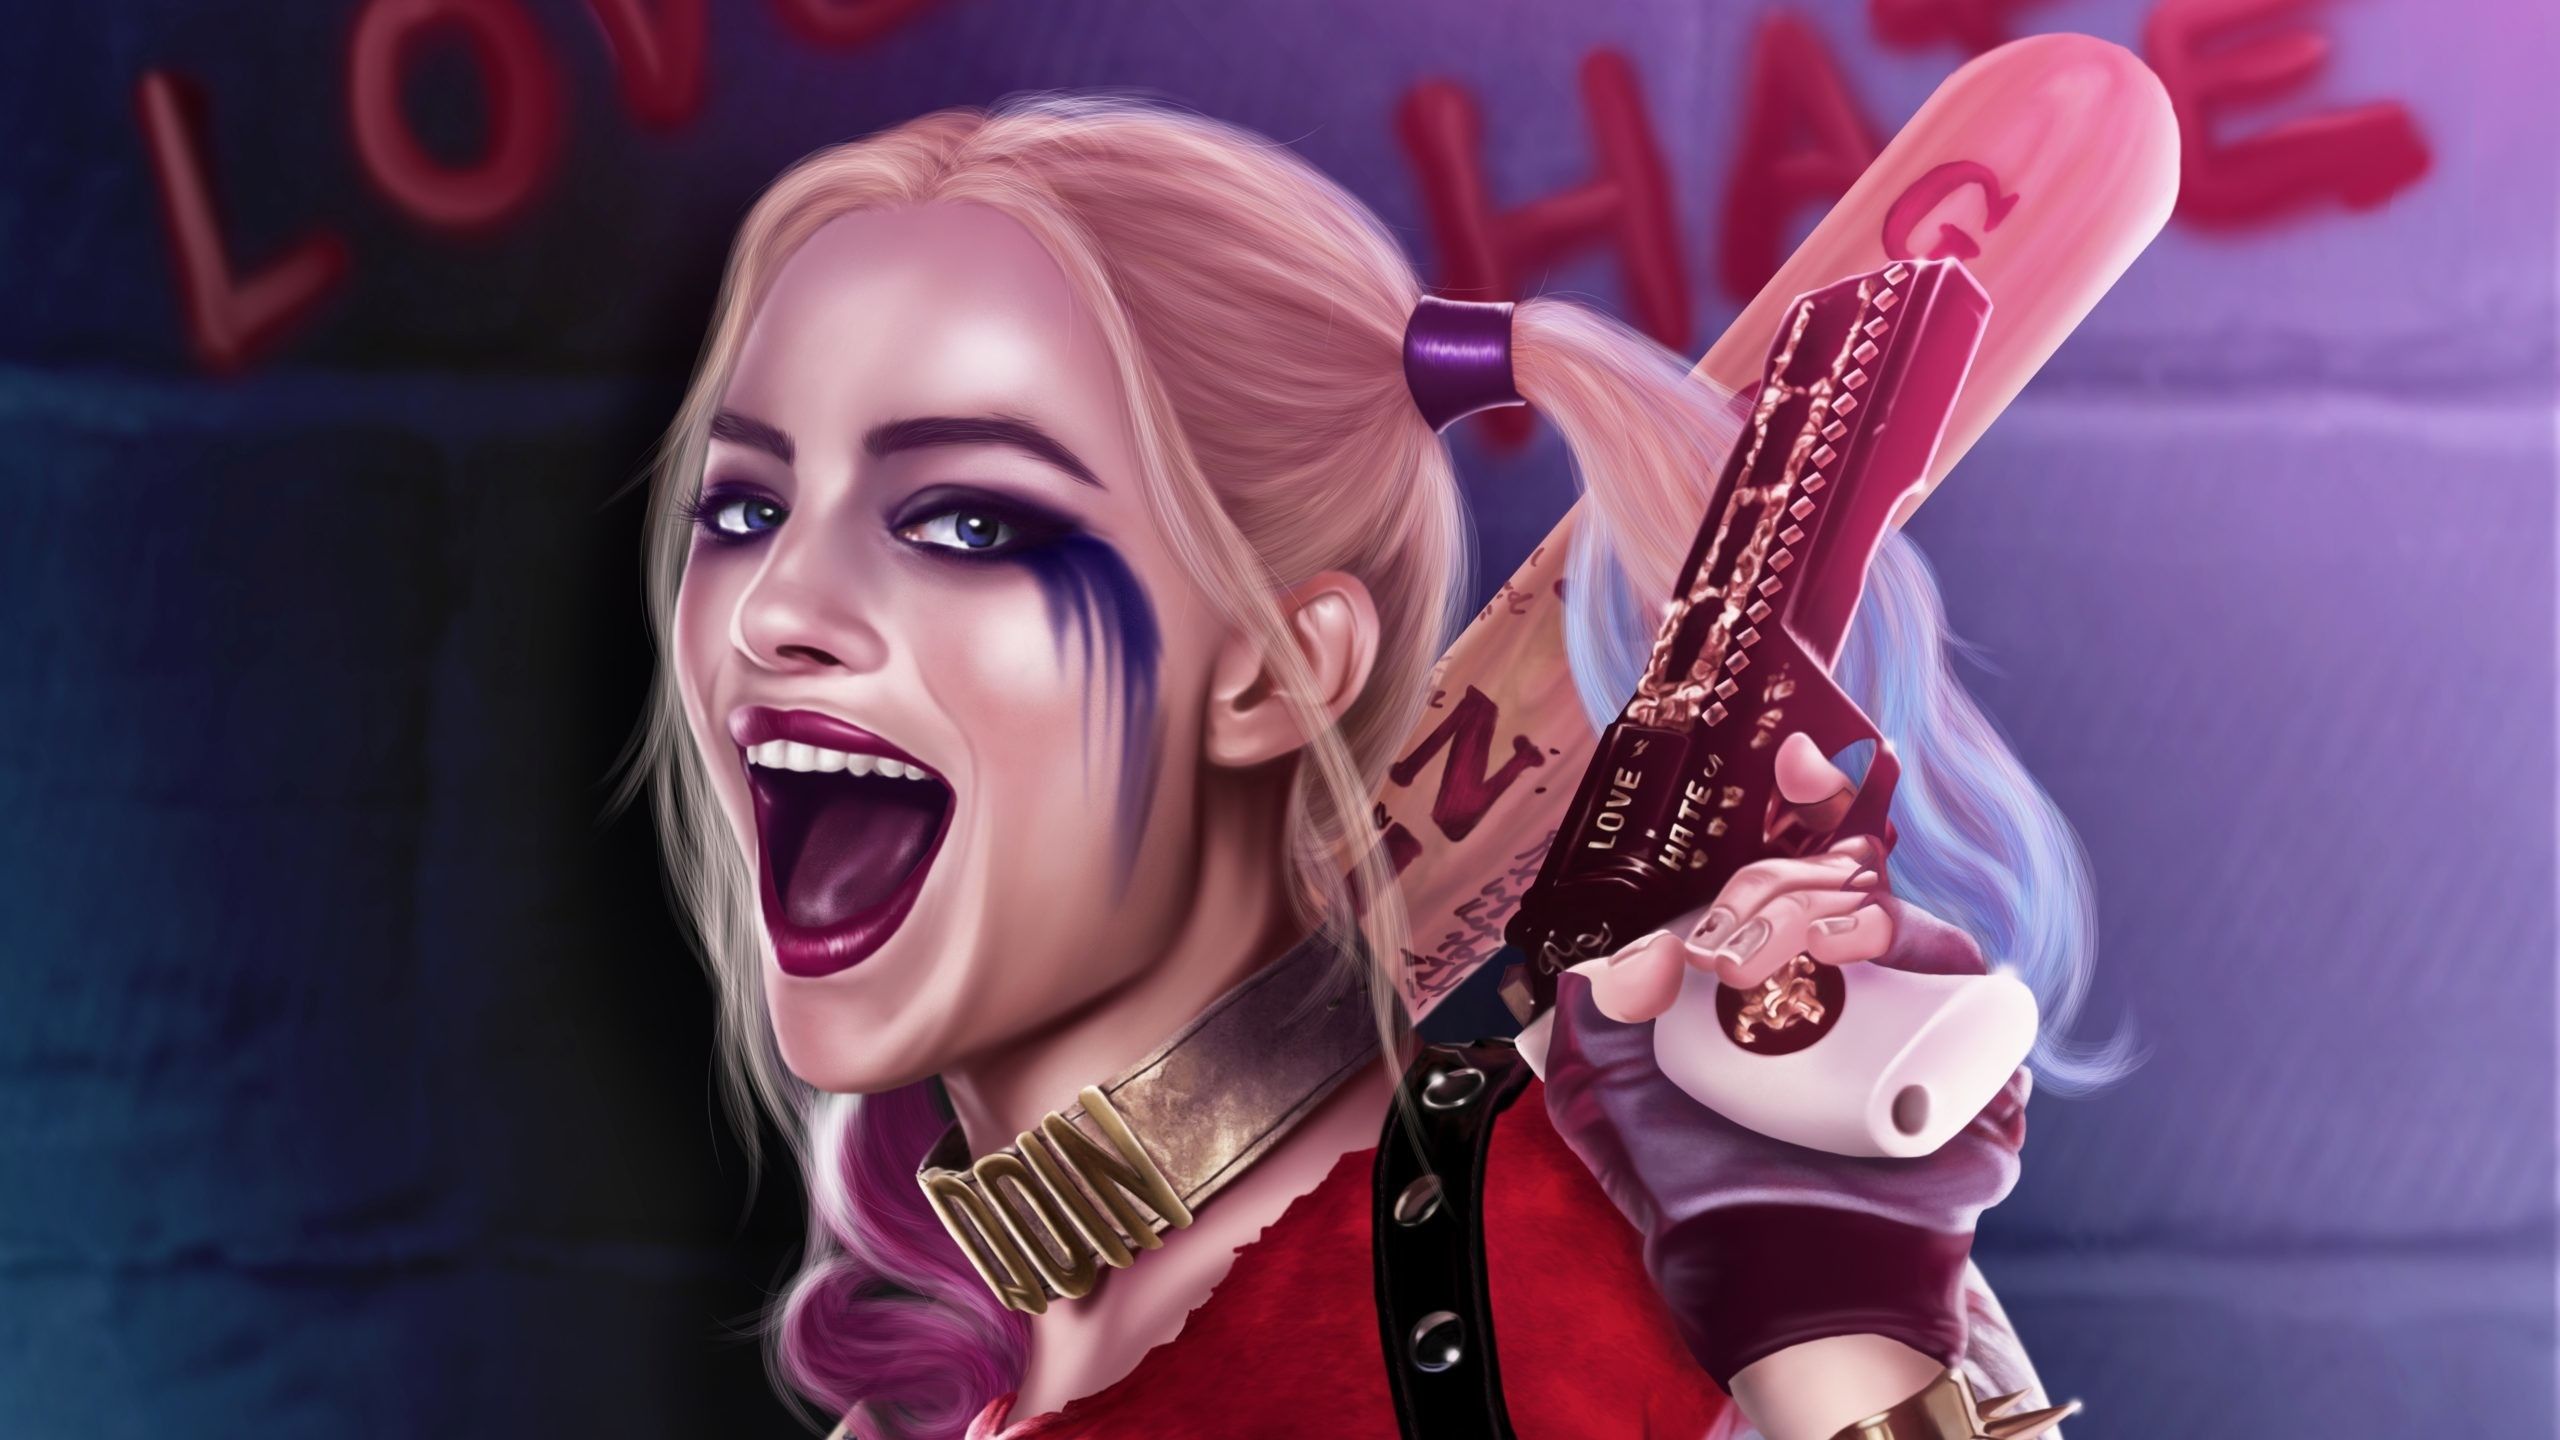 4K wallpaper: Harley Quinn Joker Girl Wallpaper HD